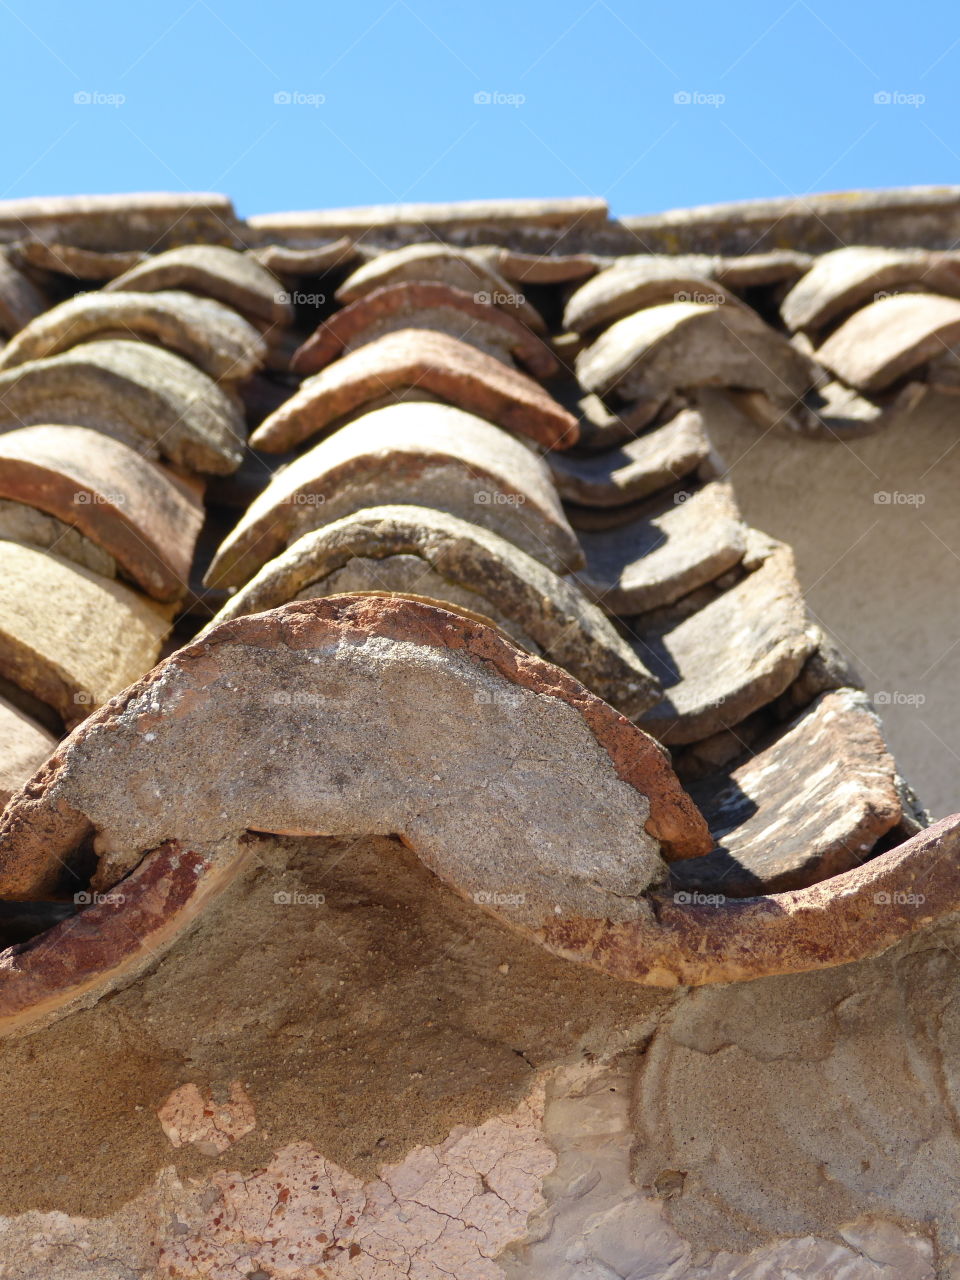 rooftiles in Dubrovnik